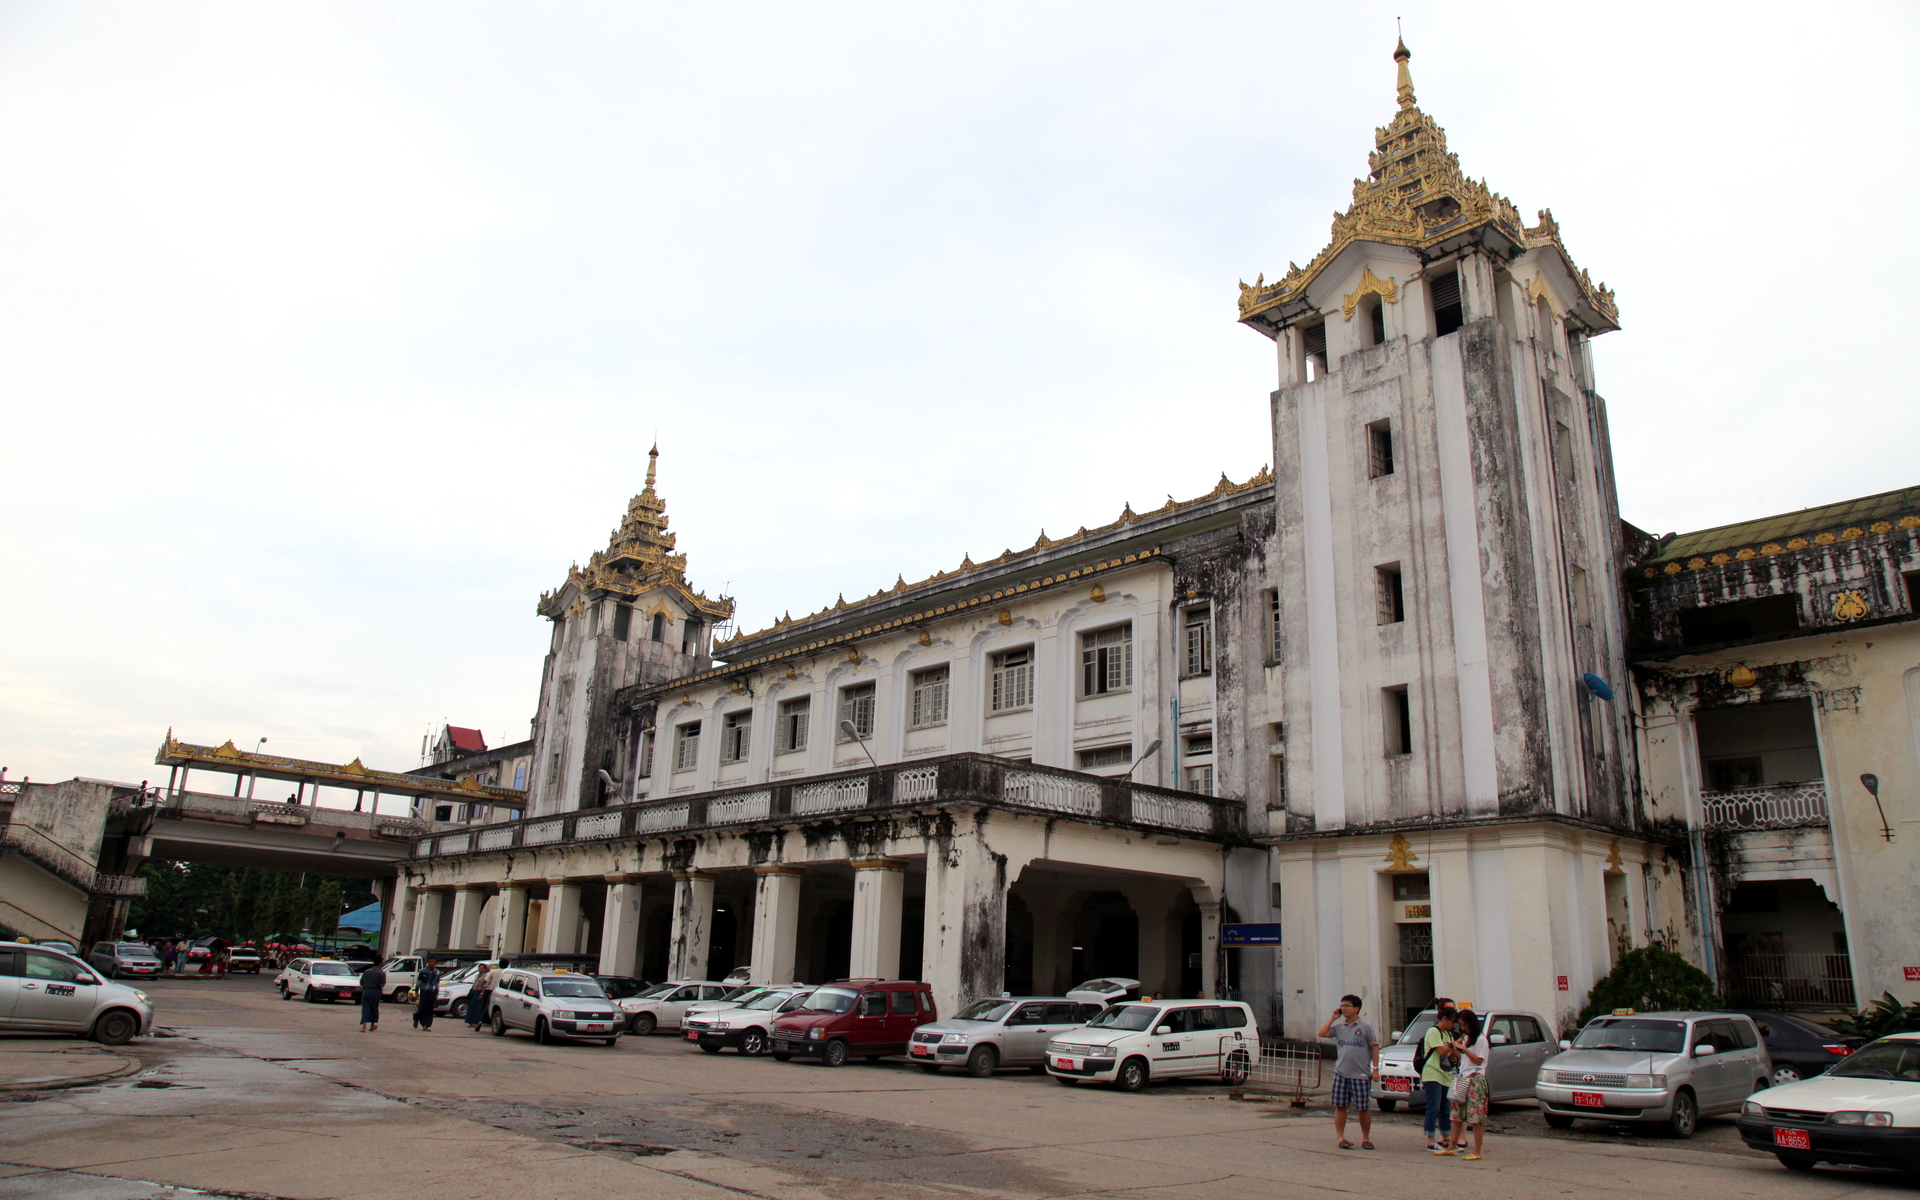 Ga trung tâm Yangon - Yangon Central Station